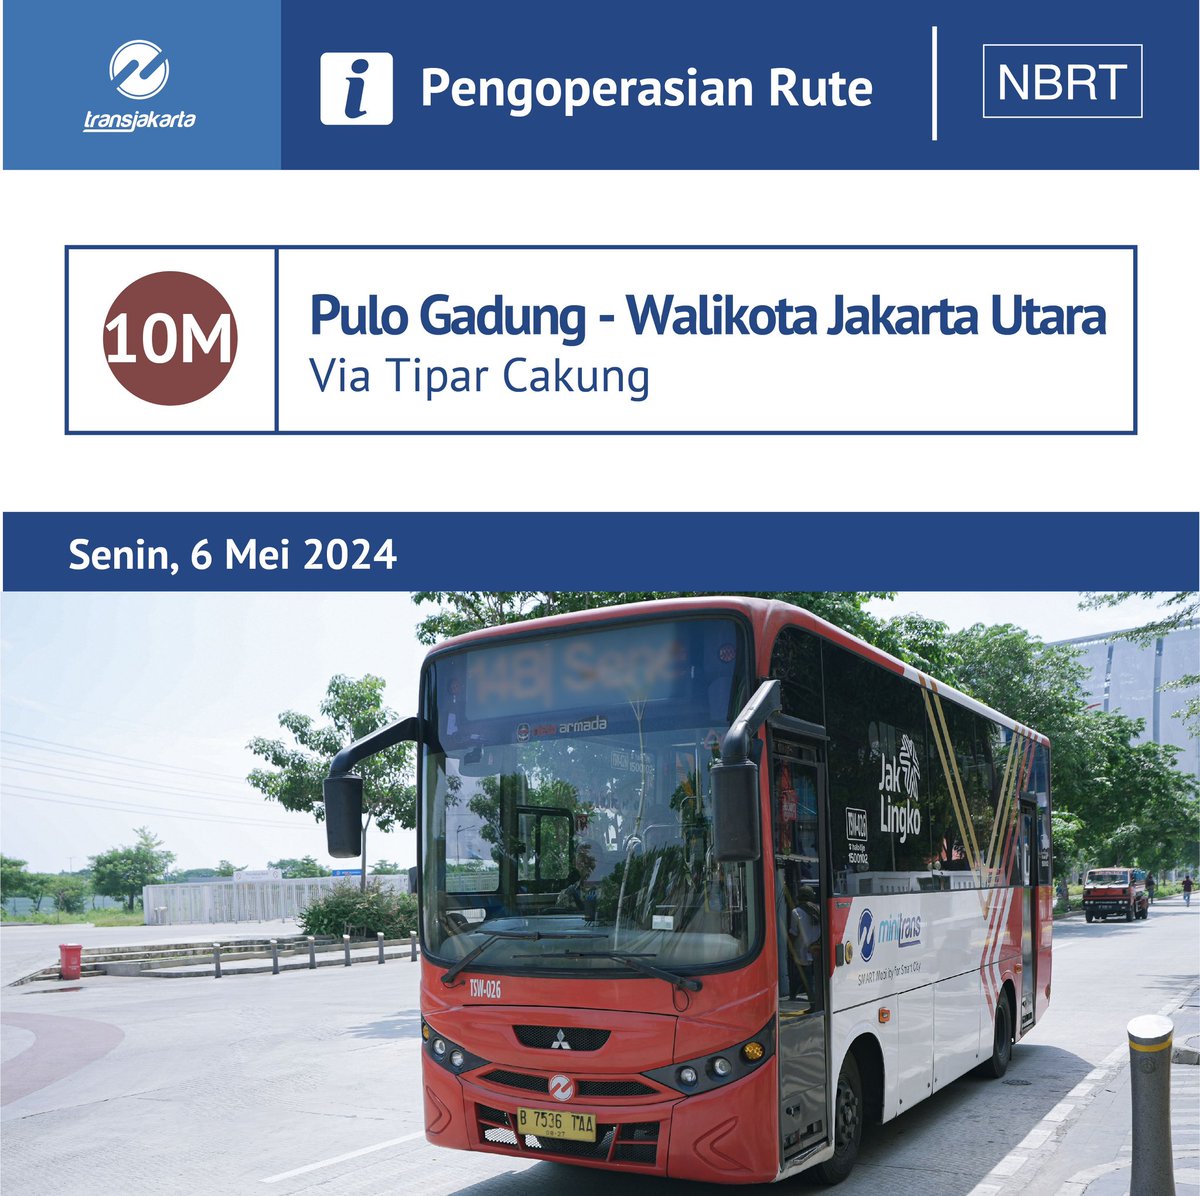 Kabar gembira, Sahabat TiJe!
Mulai Senin, 6 Mei 2024, rute 10M: Pulo Gadung - Walikota Jakarta Utara via Tipar Cakung kembali beroperasi melayani pelanggan.